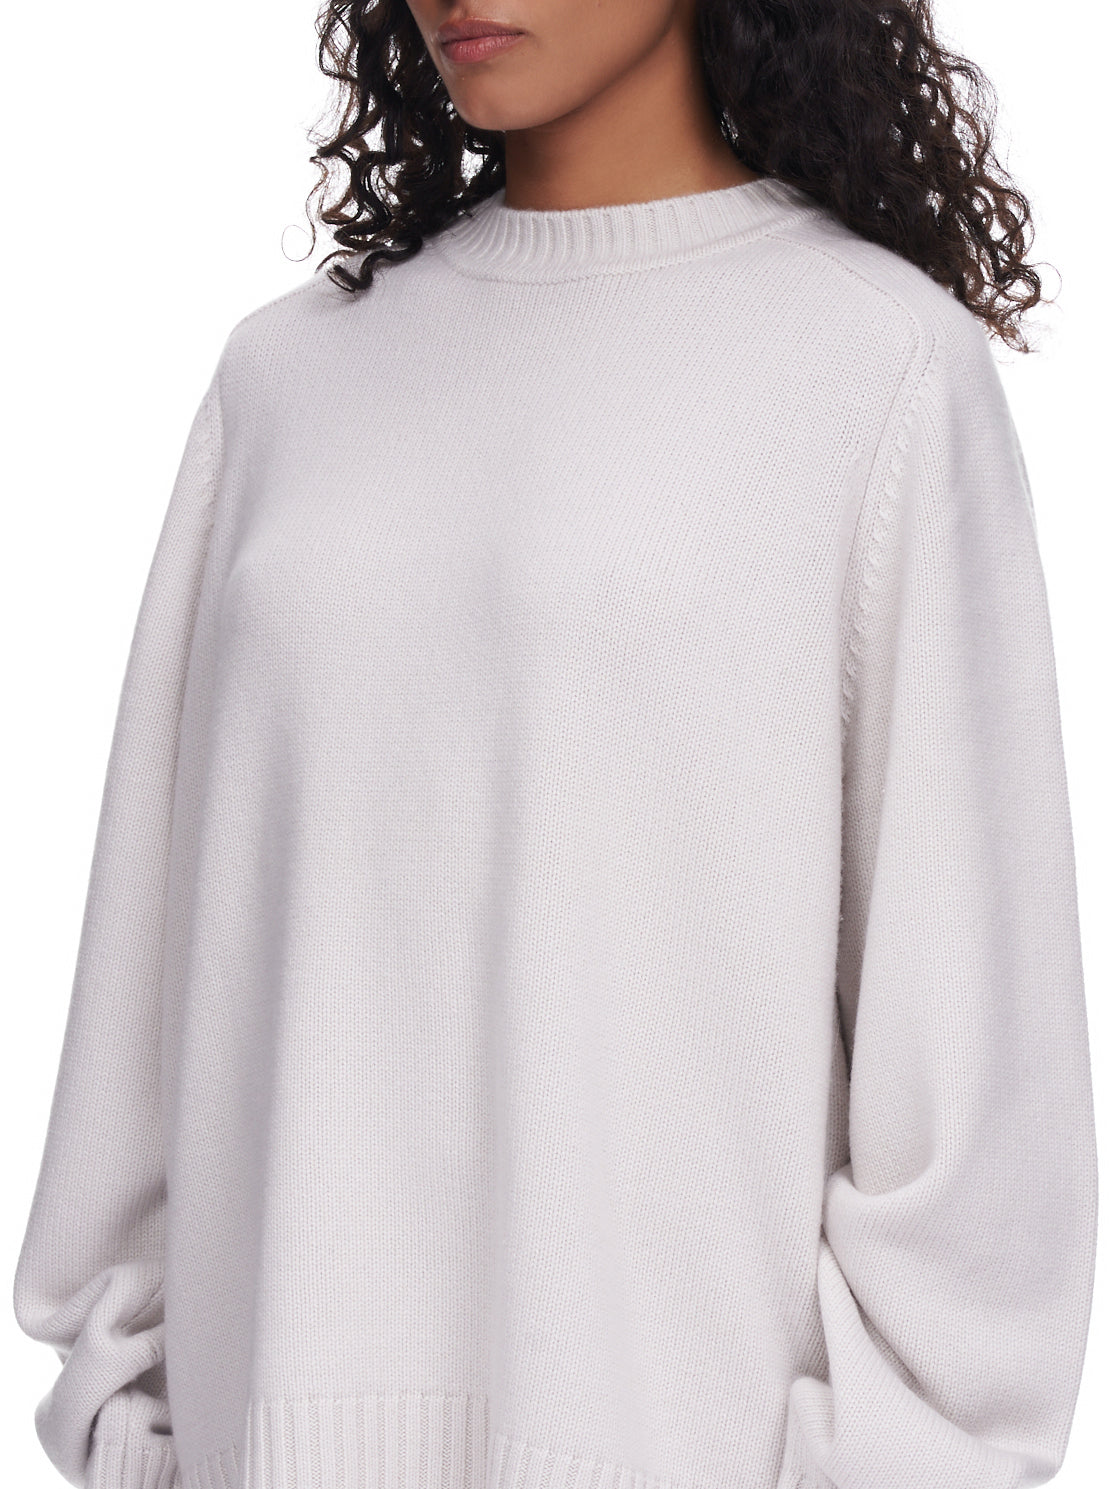 n°236 Mama Sweater (236-126-01-FE-01-CHALK)